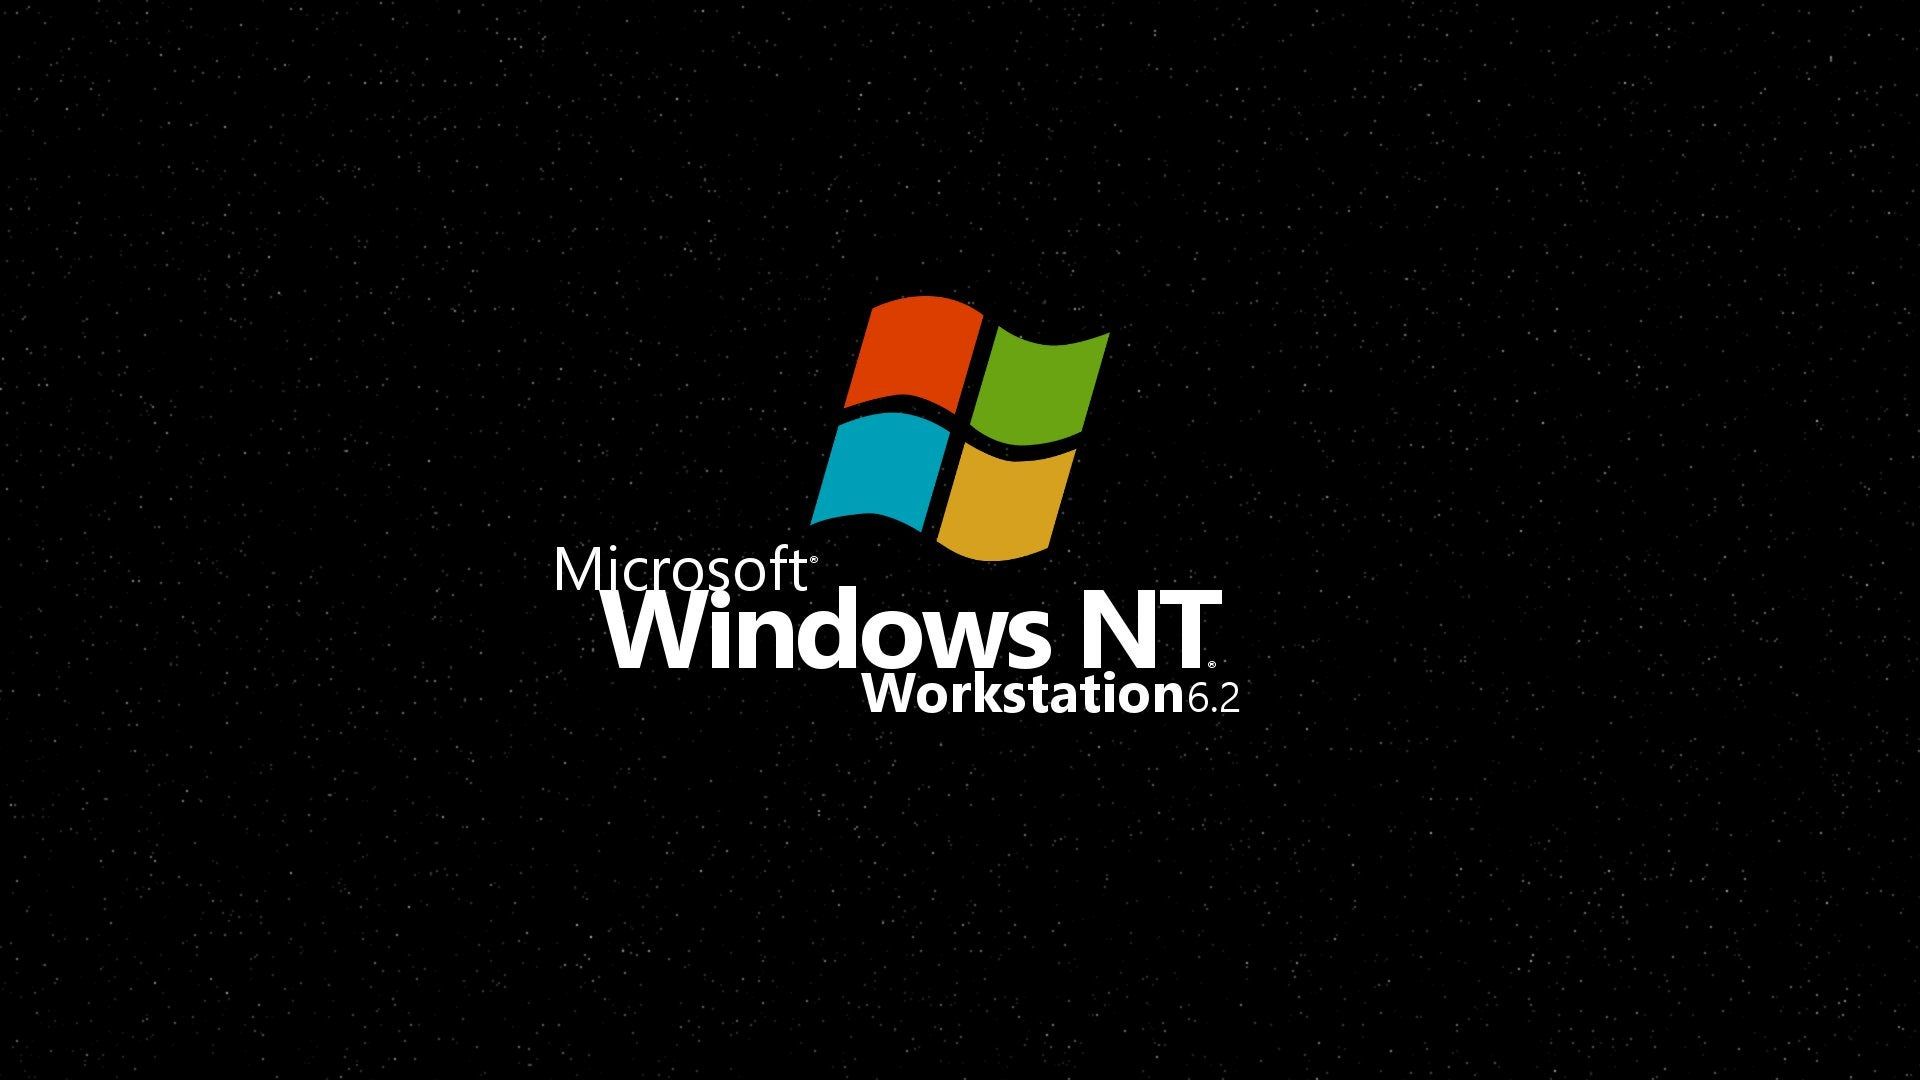 Modern Windows NT Workstation wallpaper